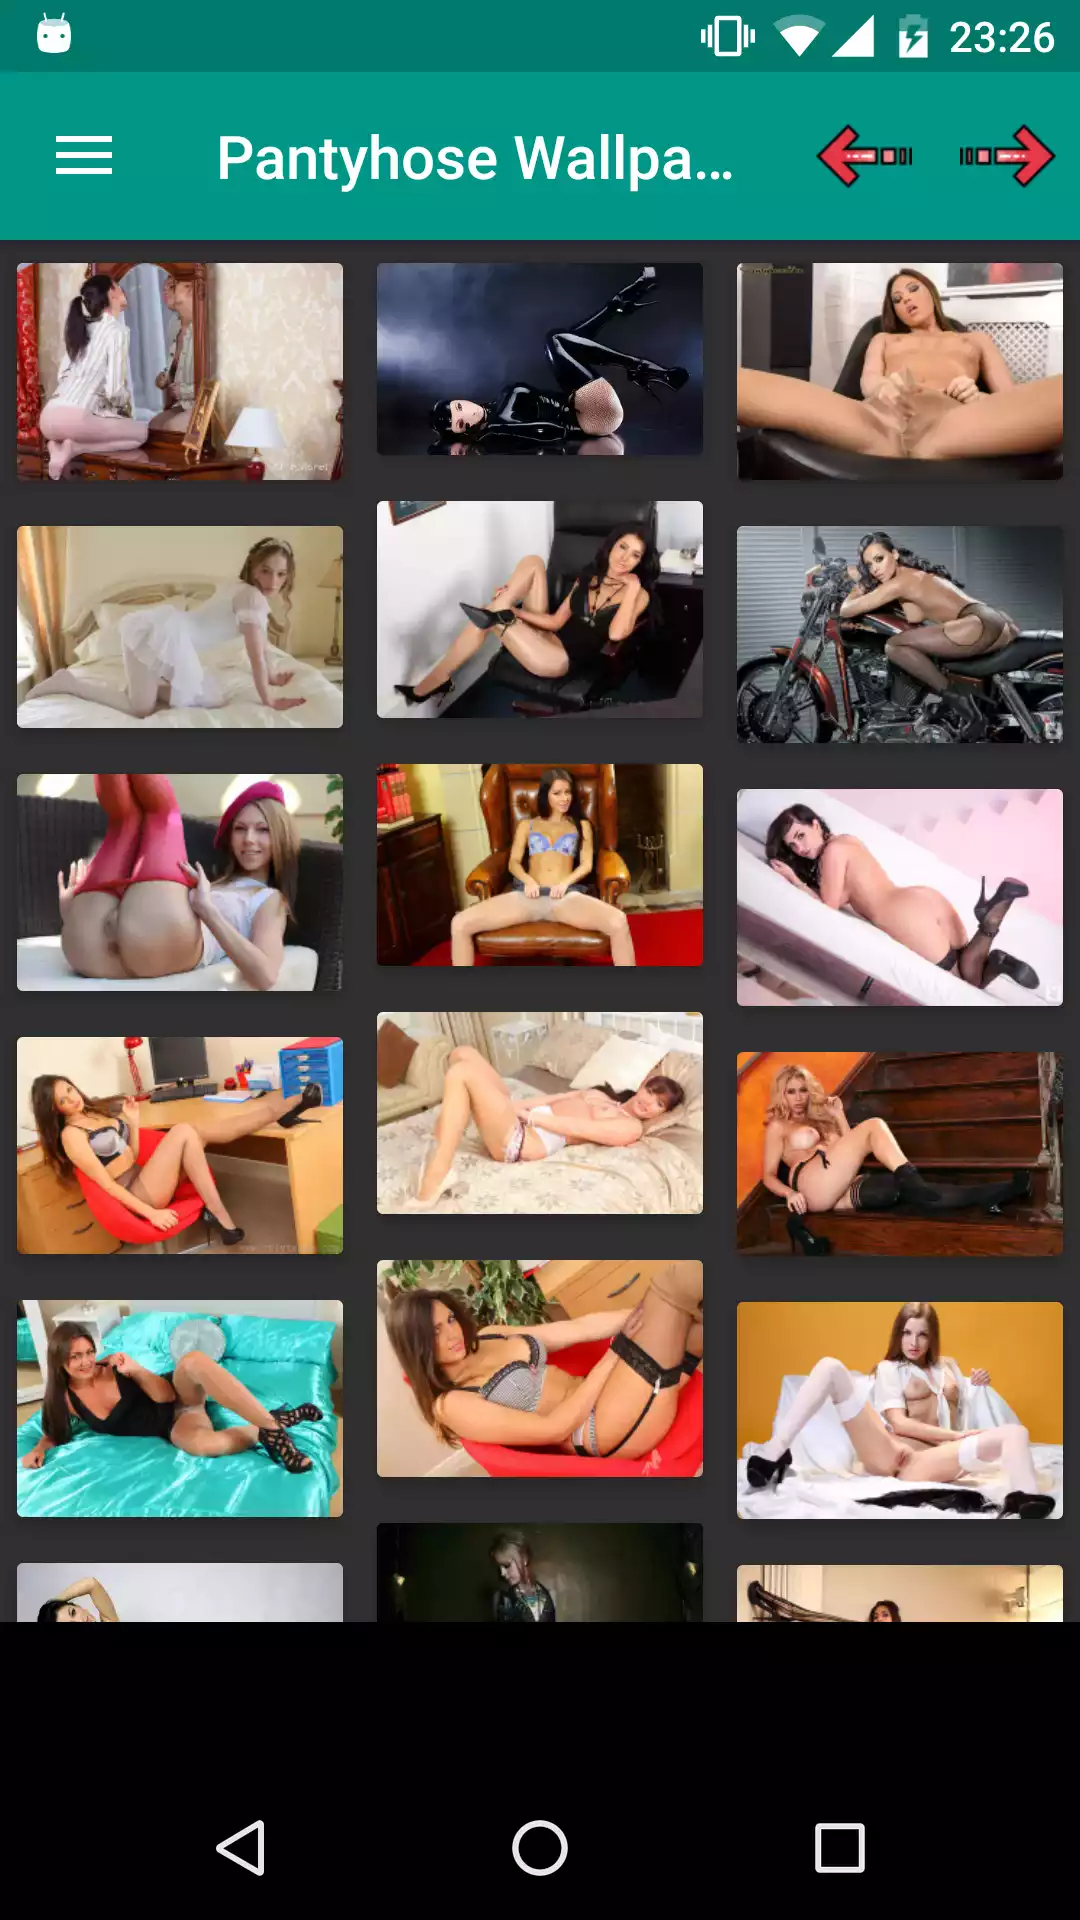 Pantyhouse backgrounds wallpapers,pics,pornstars,pantyhouse,free,fetish,pic,offline,futanari,erotic,best,gallery,backgrounds,galleries,apk,pornstar,nylon,porn,android,hantai,amateur,hentai,photos,hot,sexy,photo,for